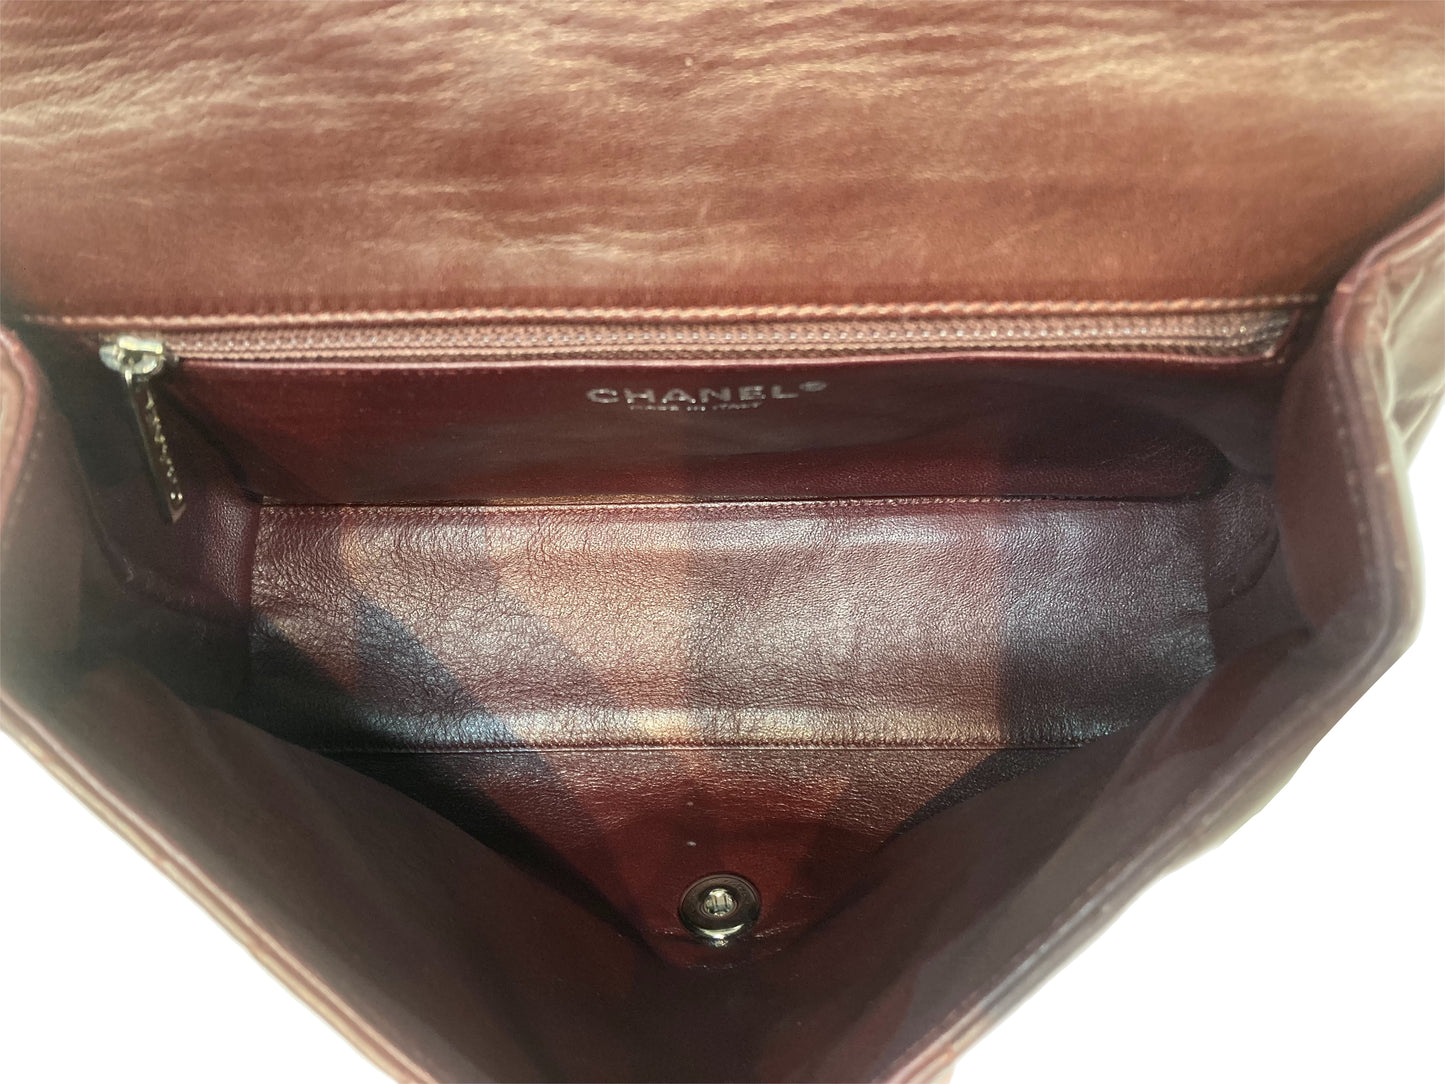 CHANEL Leather Classic Kelly Handbag Burgundy